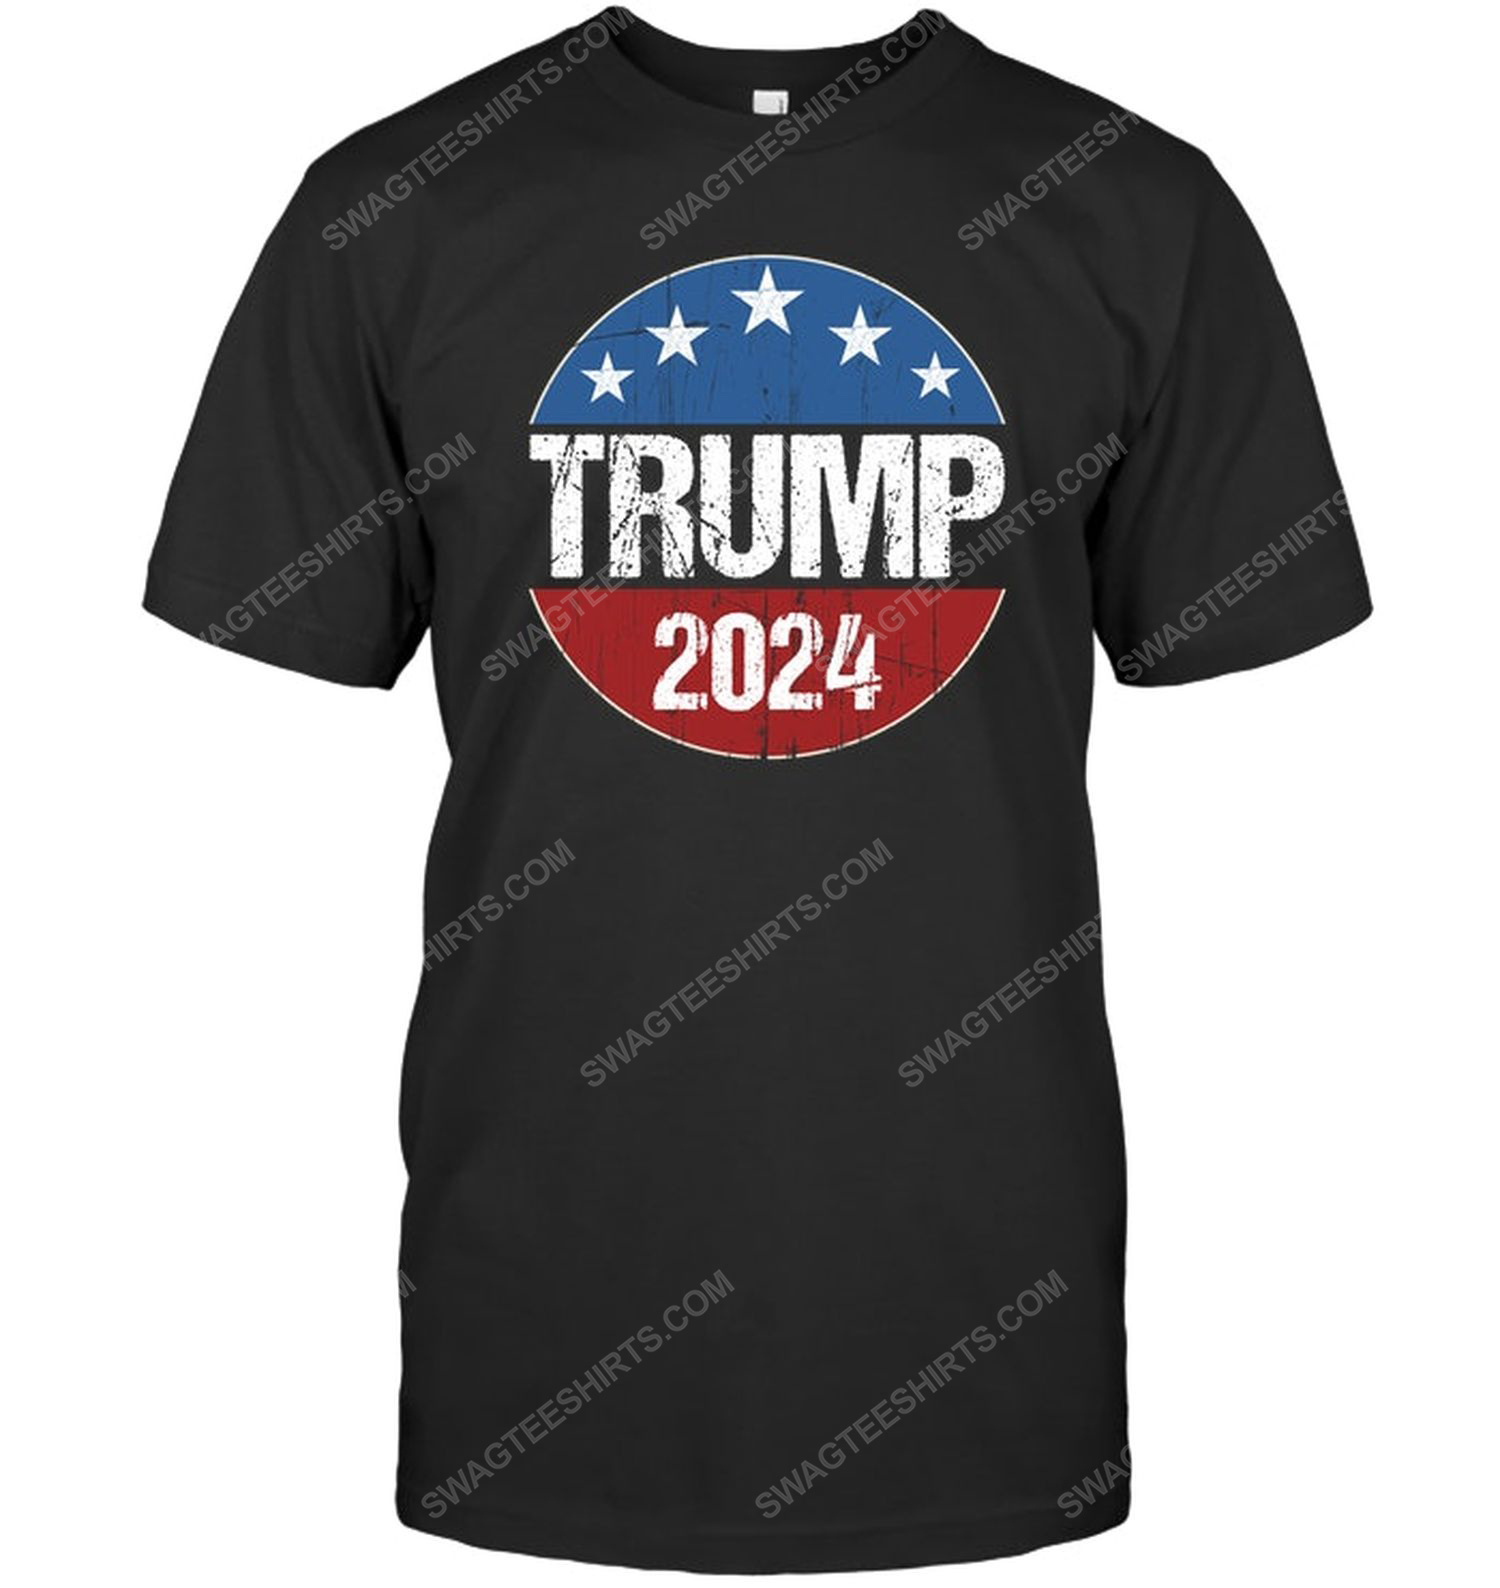 Trump 2024 american flag political tshirt